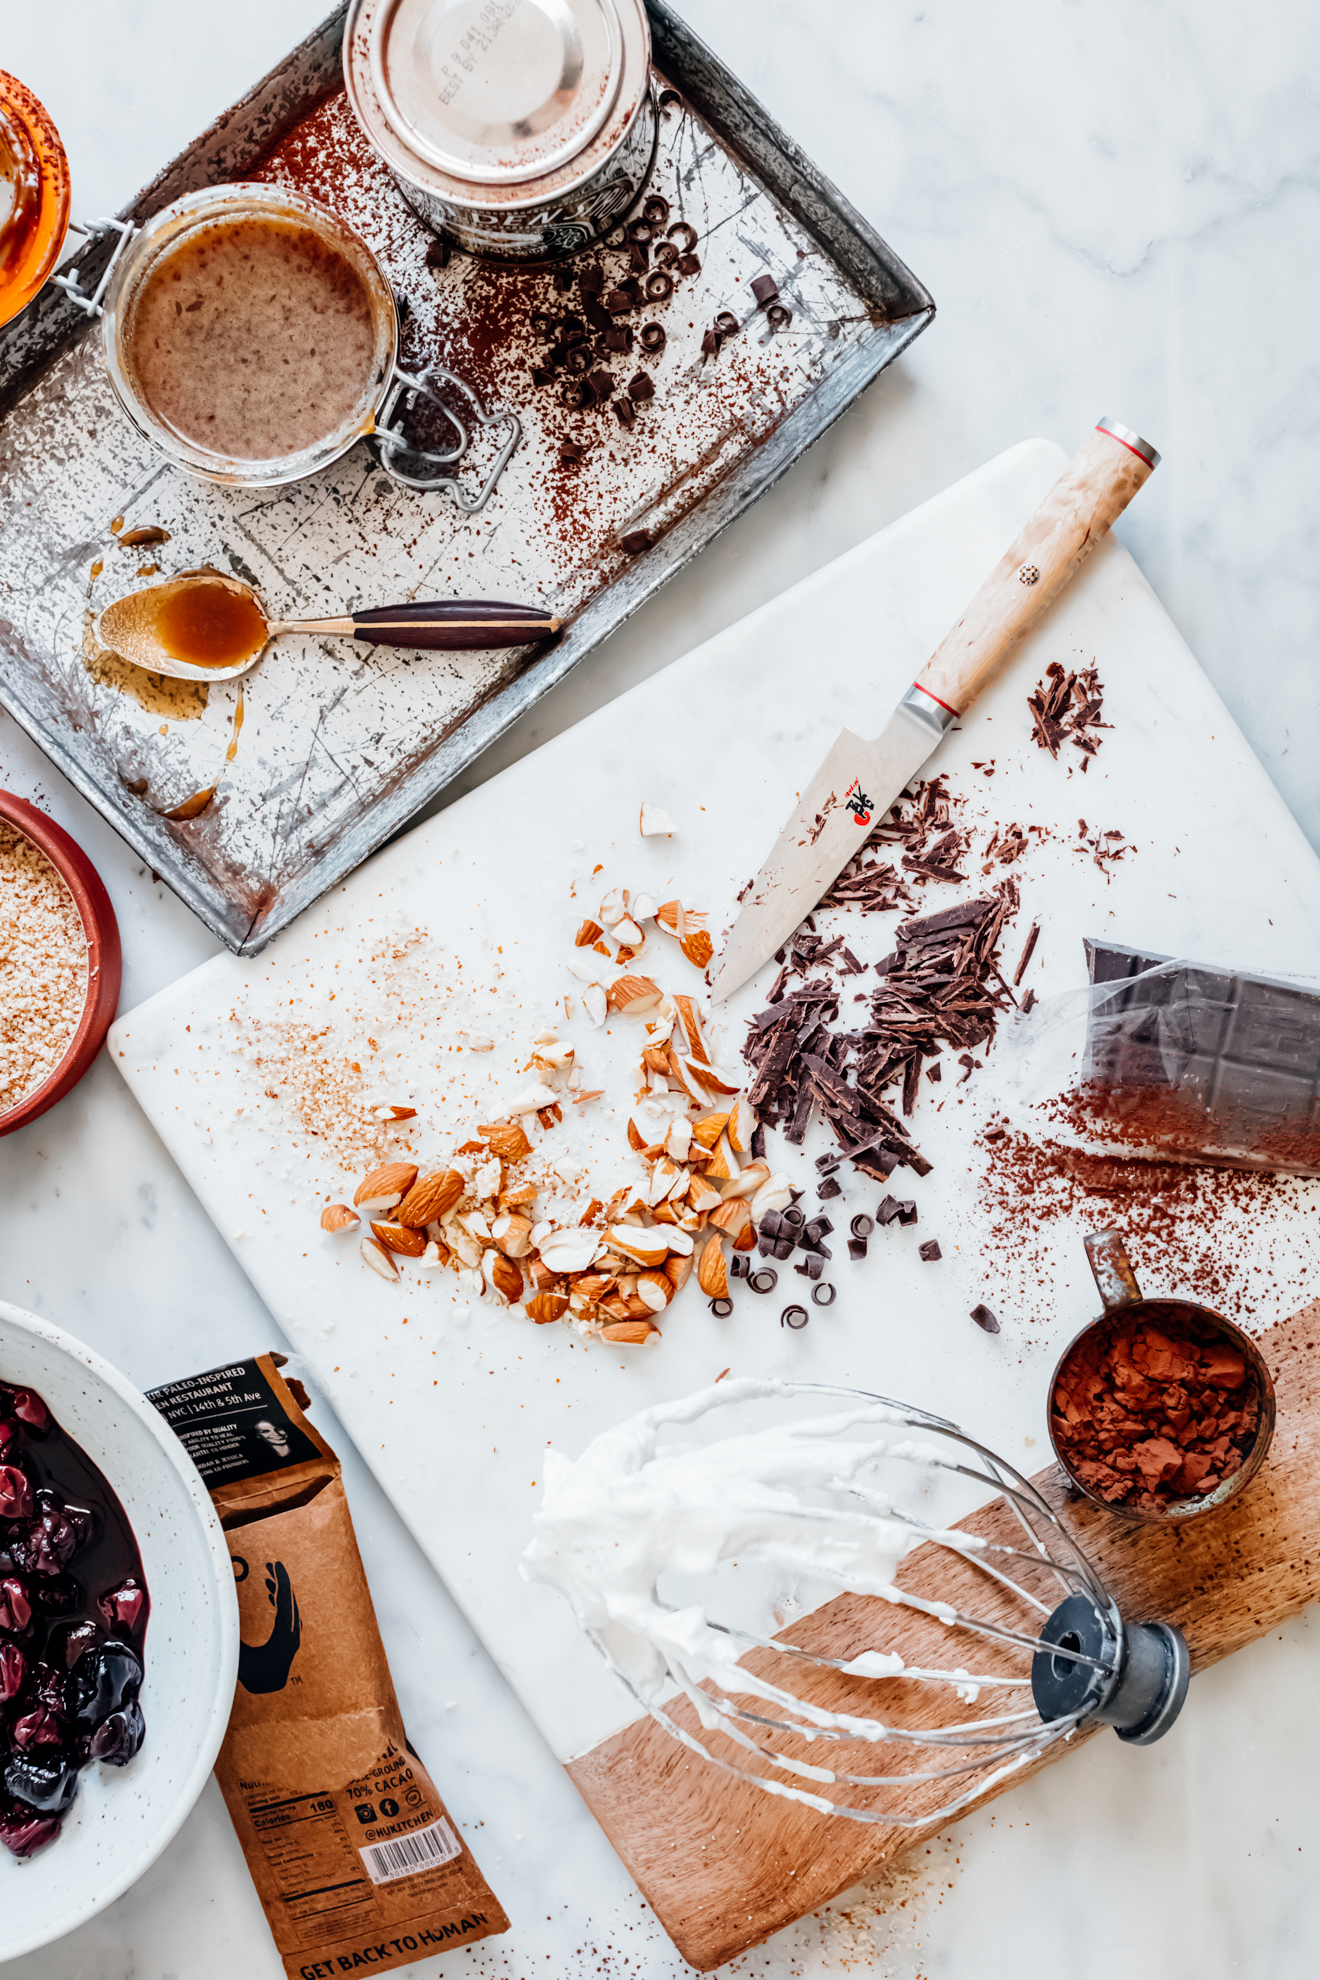 Gluten-Free Chocolate Tart with Cherries and Almonds